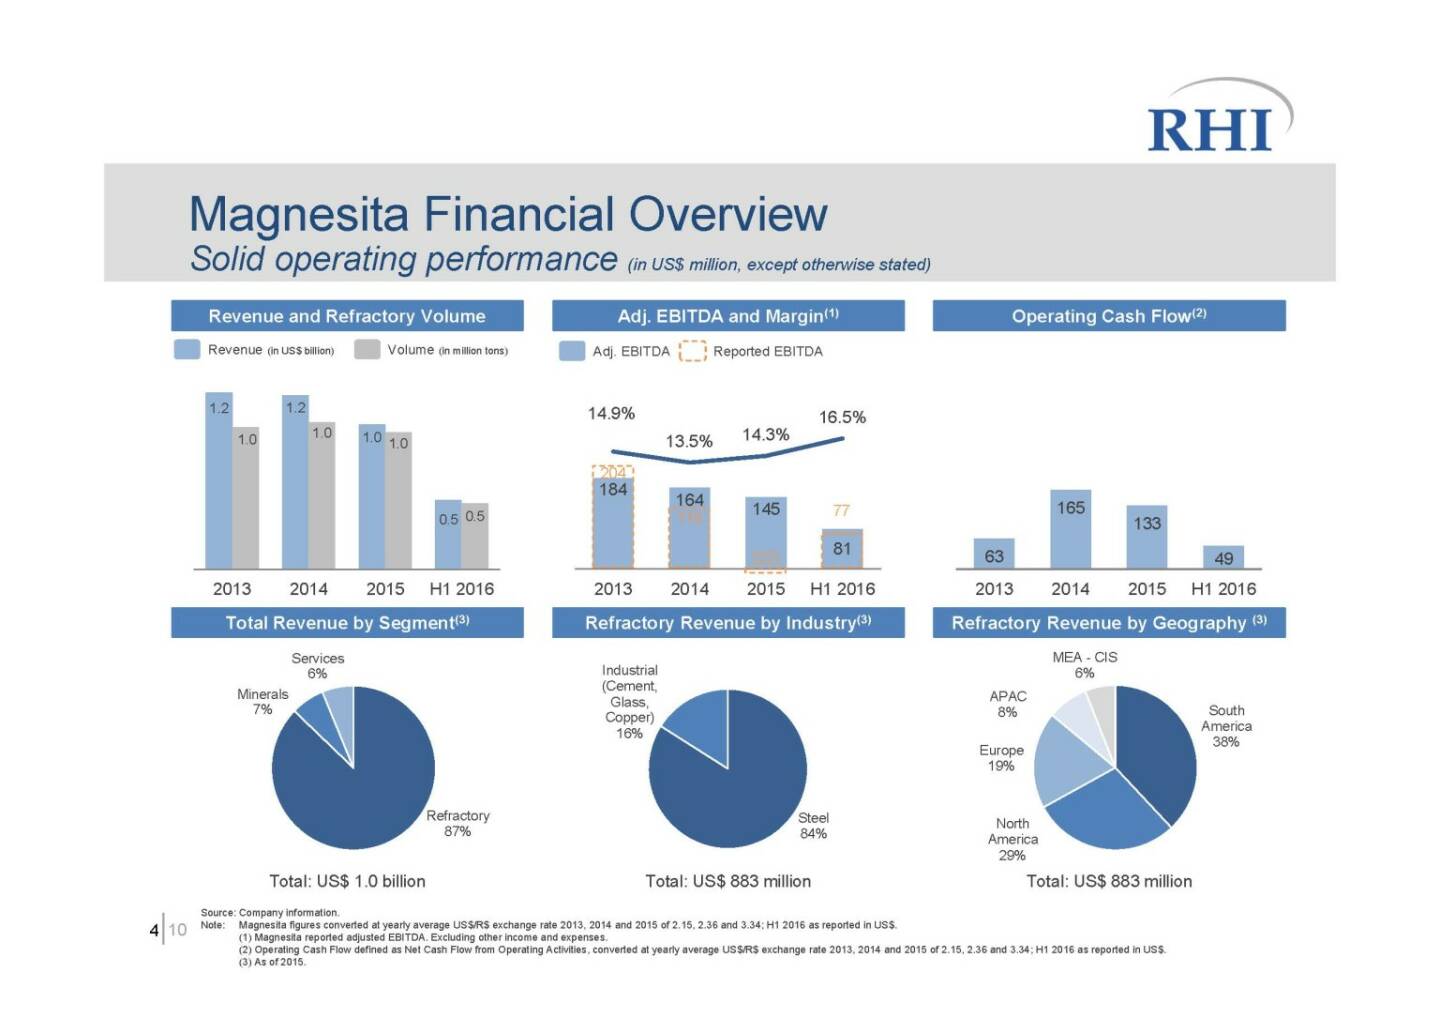 RHI - Magnesita Financial Overview